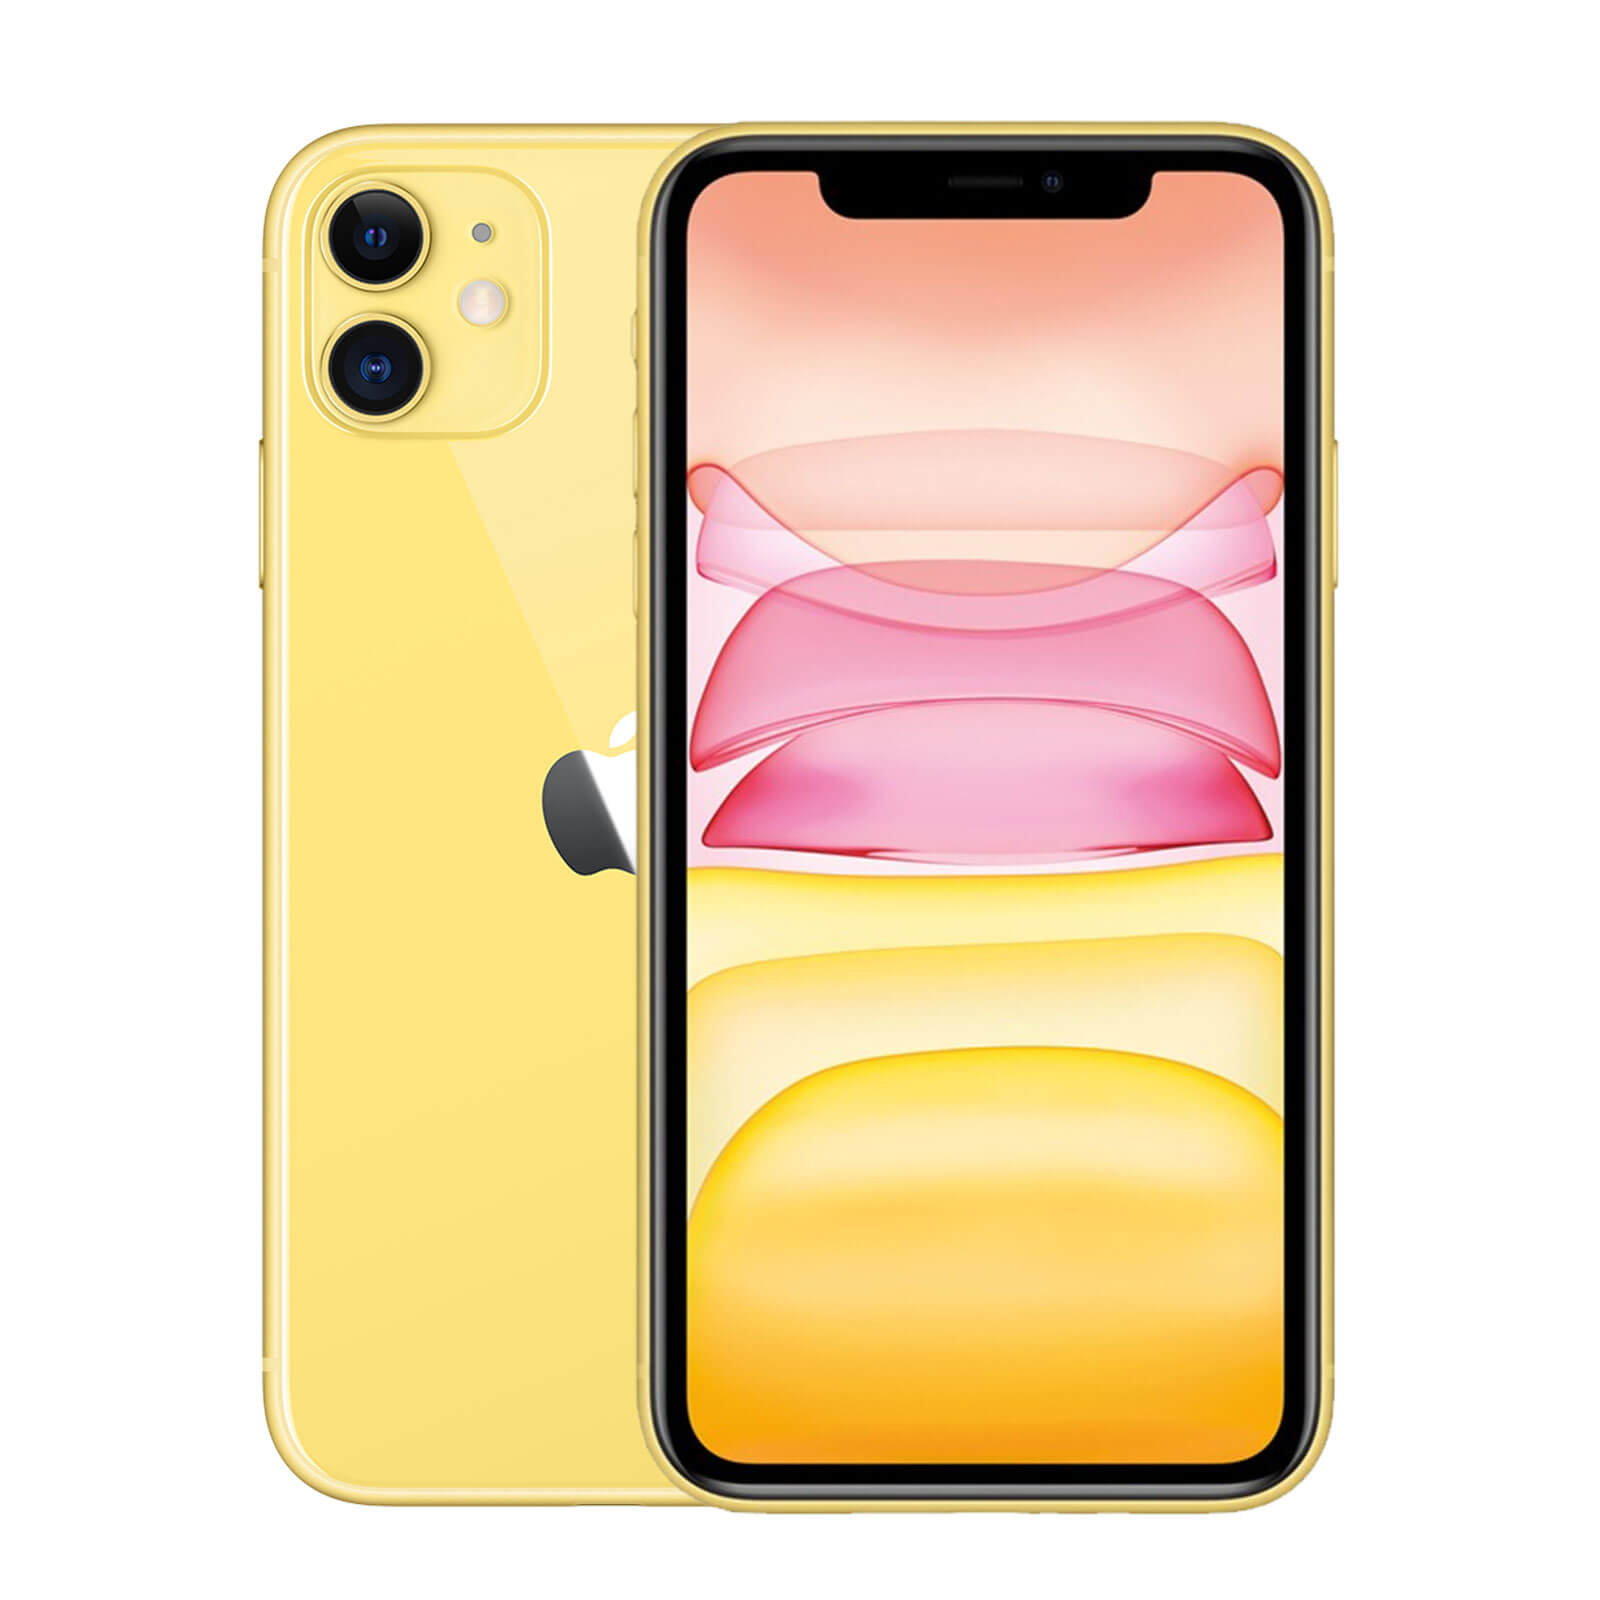 Apple iPhone 11 128GB Yellow Very Good - Sprint